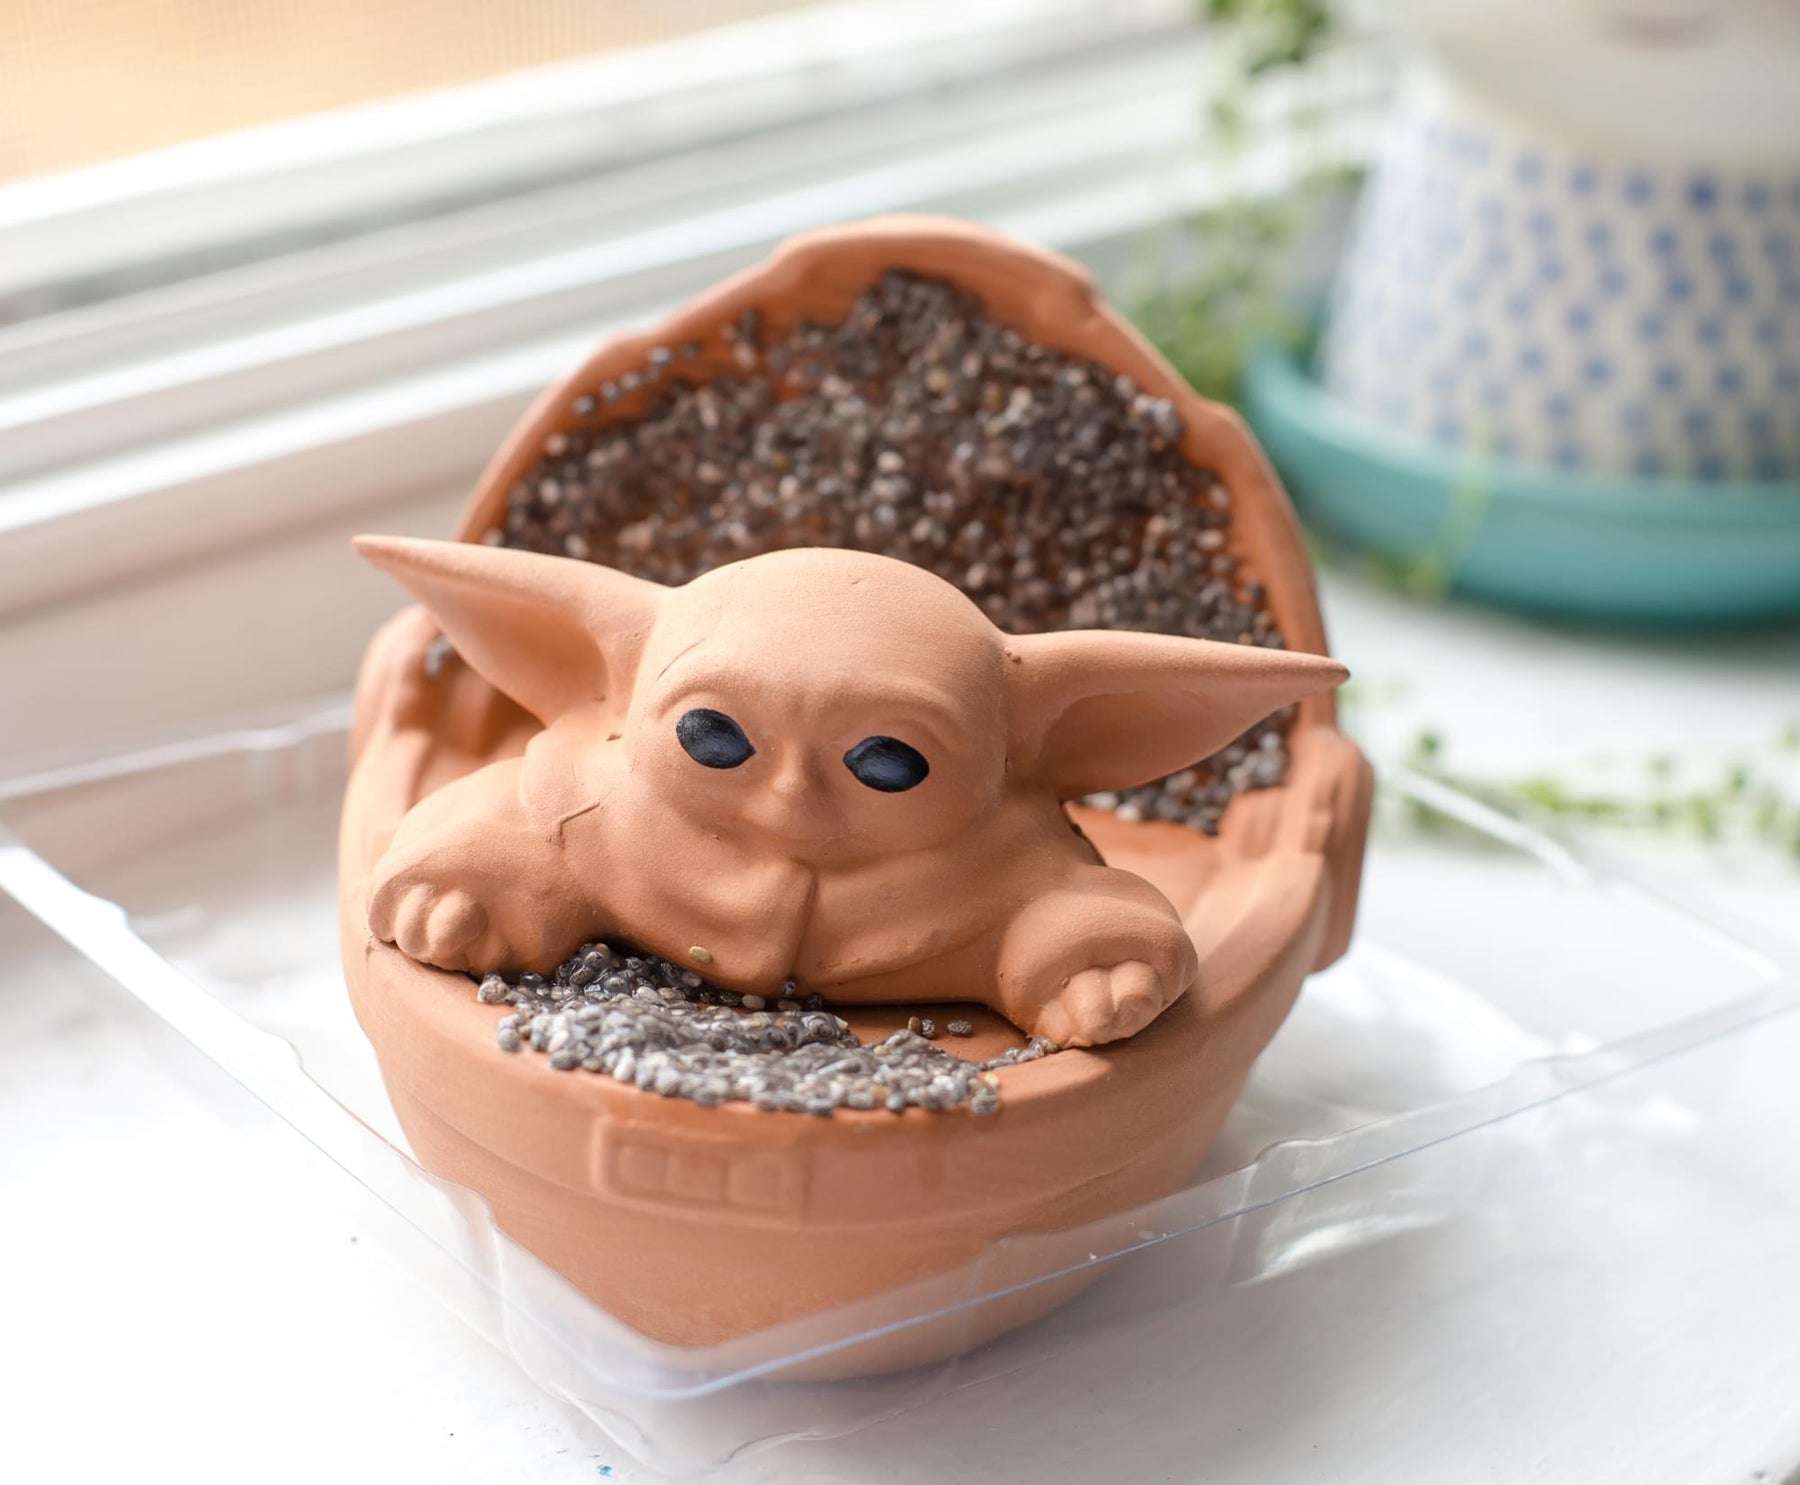 Chia Pet Planter Decorative Indoor Garden Pottery- Baby Yoda